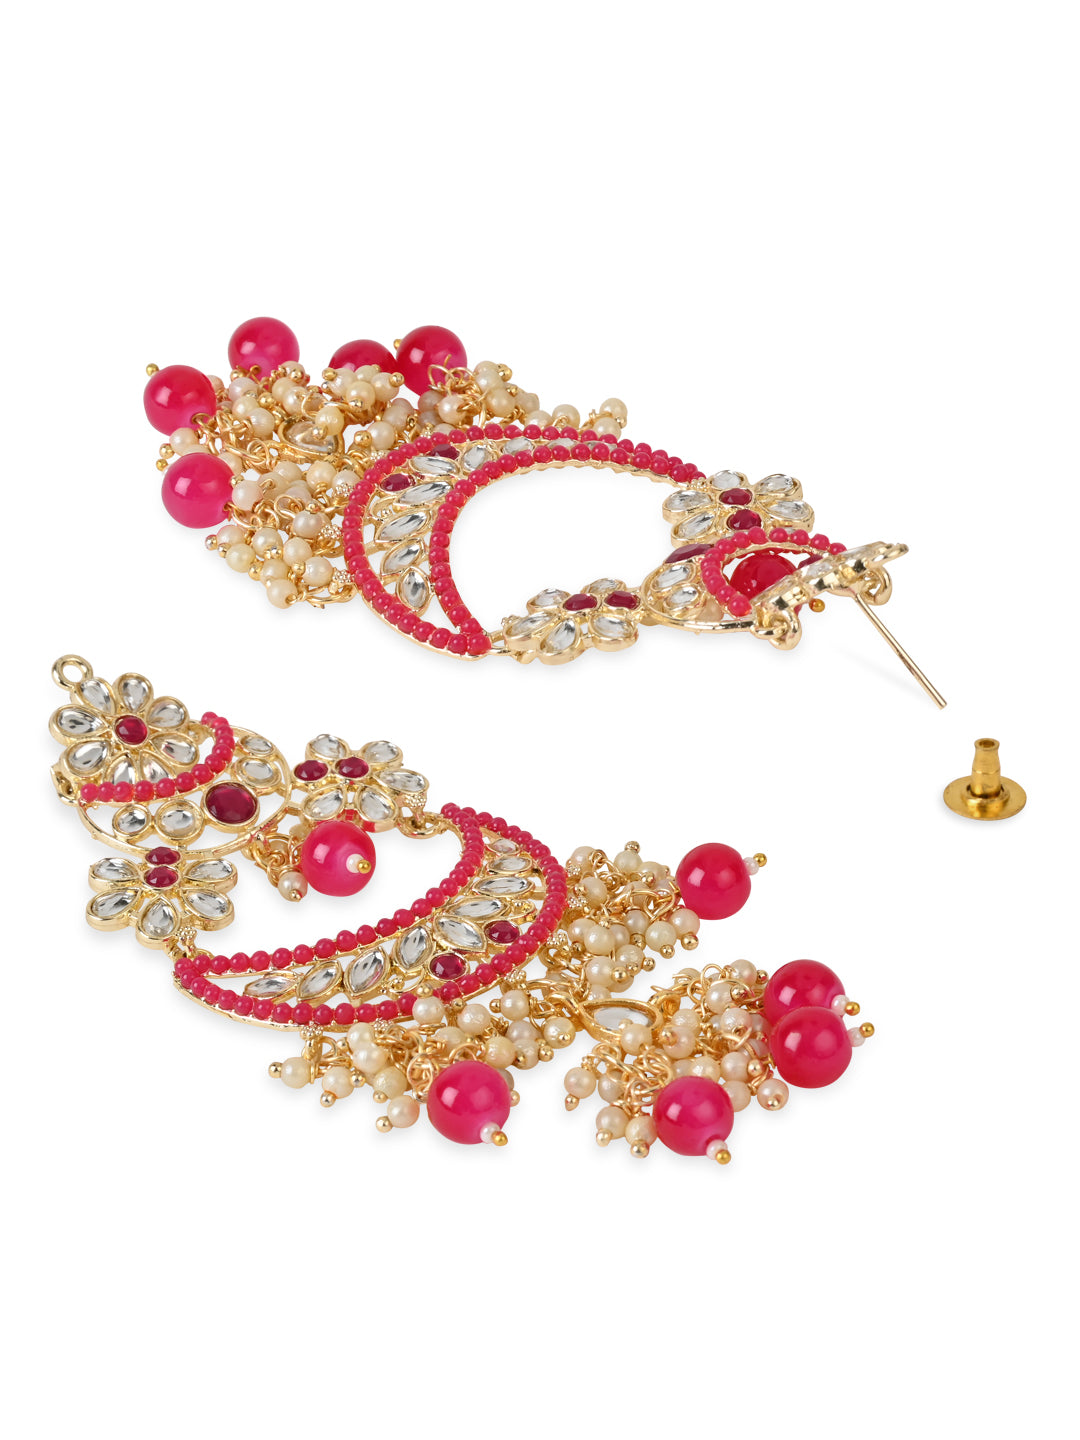 Women's 18K Gold Plated Traditional Handcrafted Pearl Kundan Beaded Chandbali Earrings (E3054Q) - I Jewels